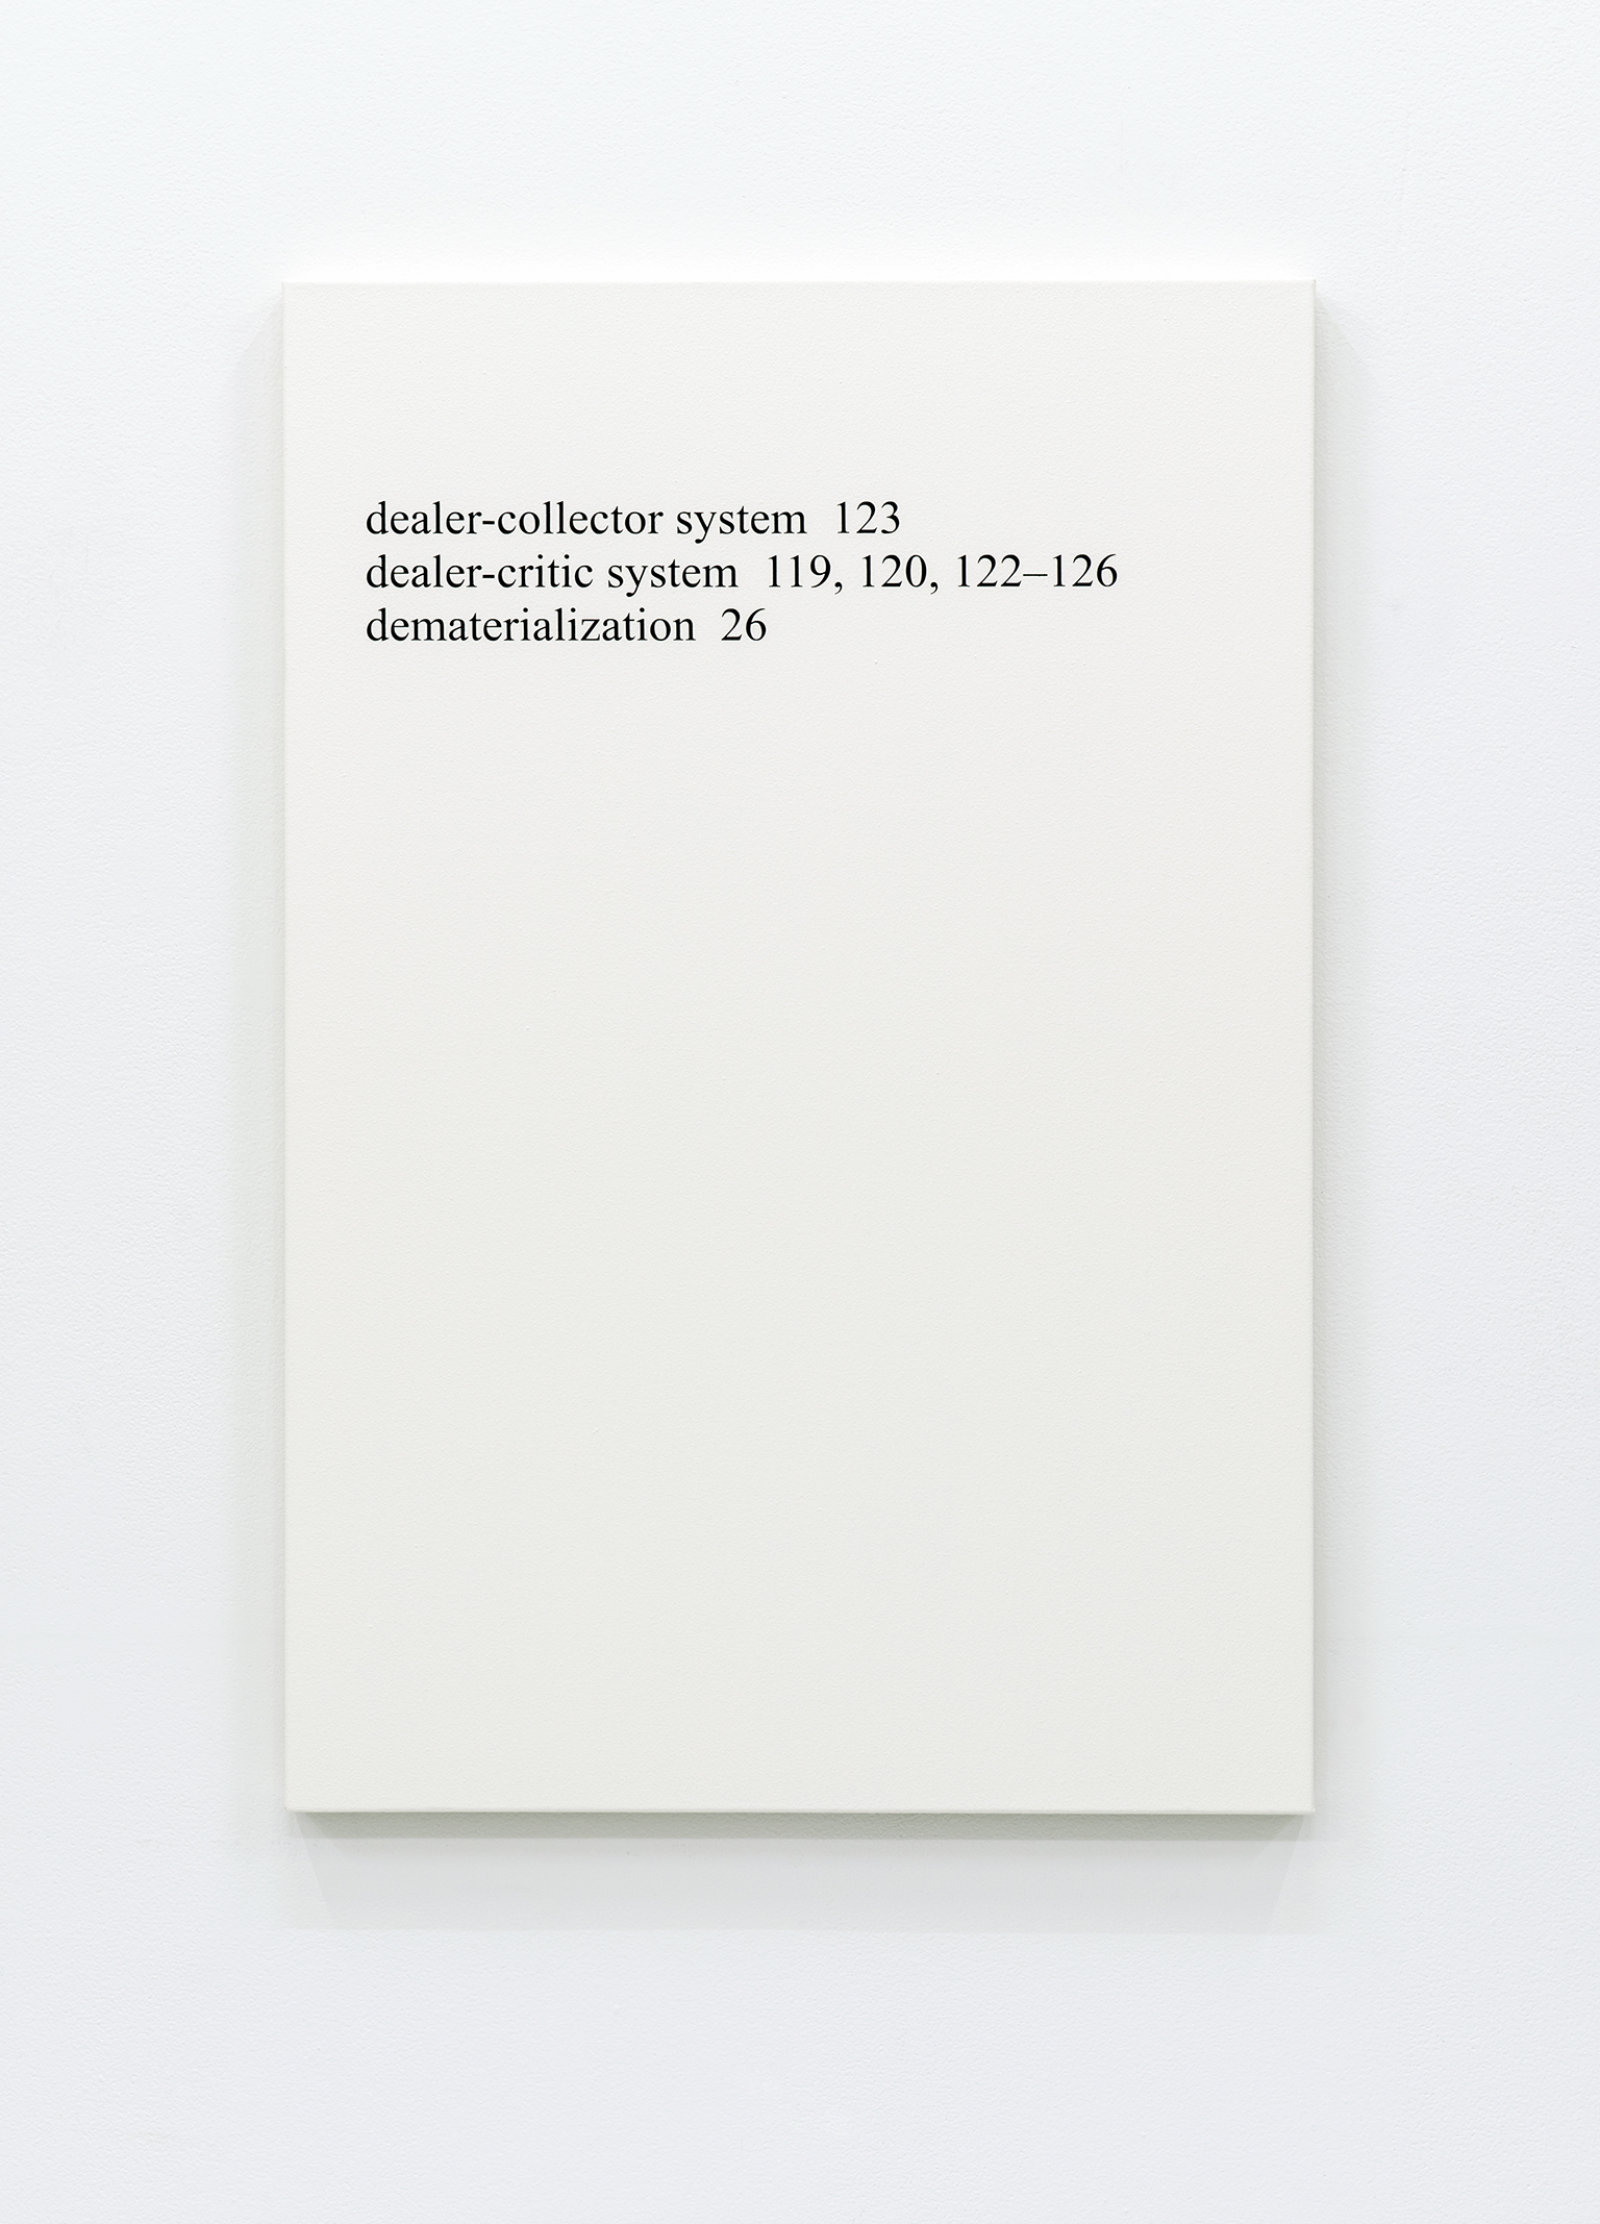 Ron Terada, High Price “D”, 2013, acrylic on canvas, 36 x 24 in. (91 x 61 cm)